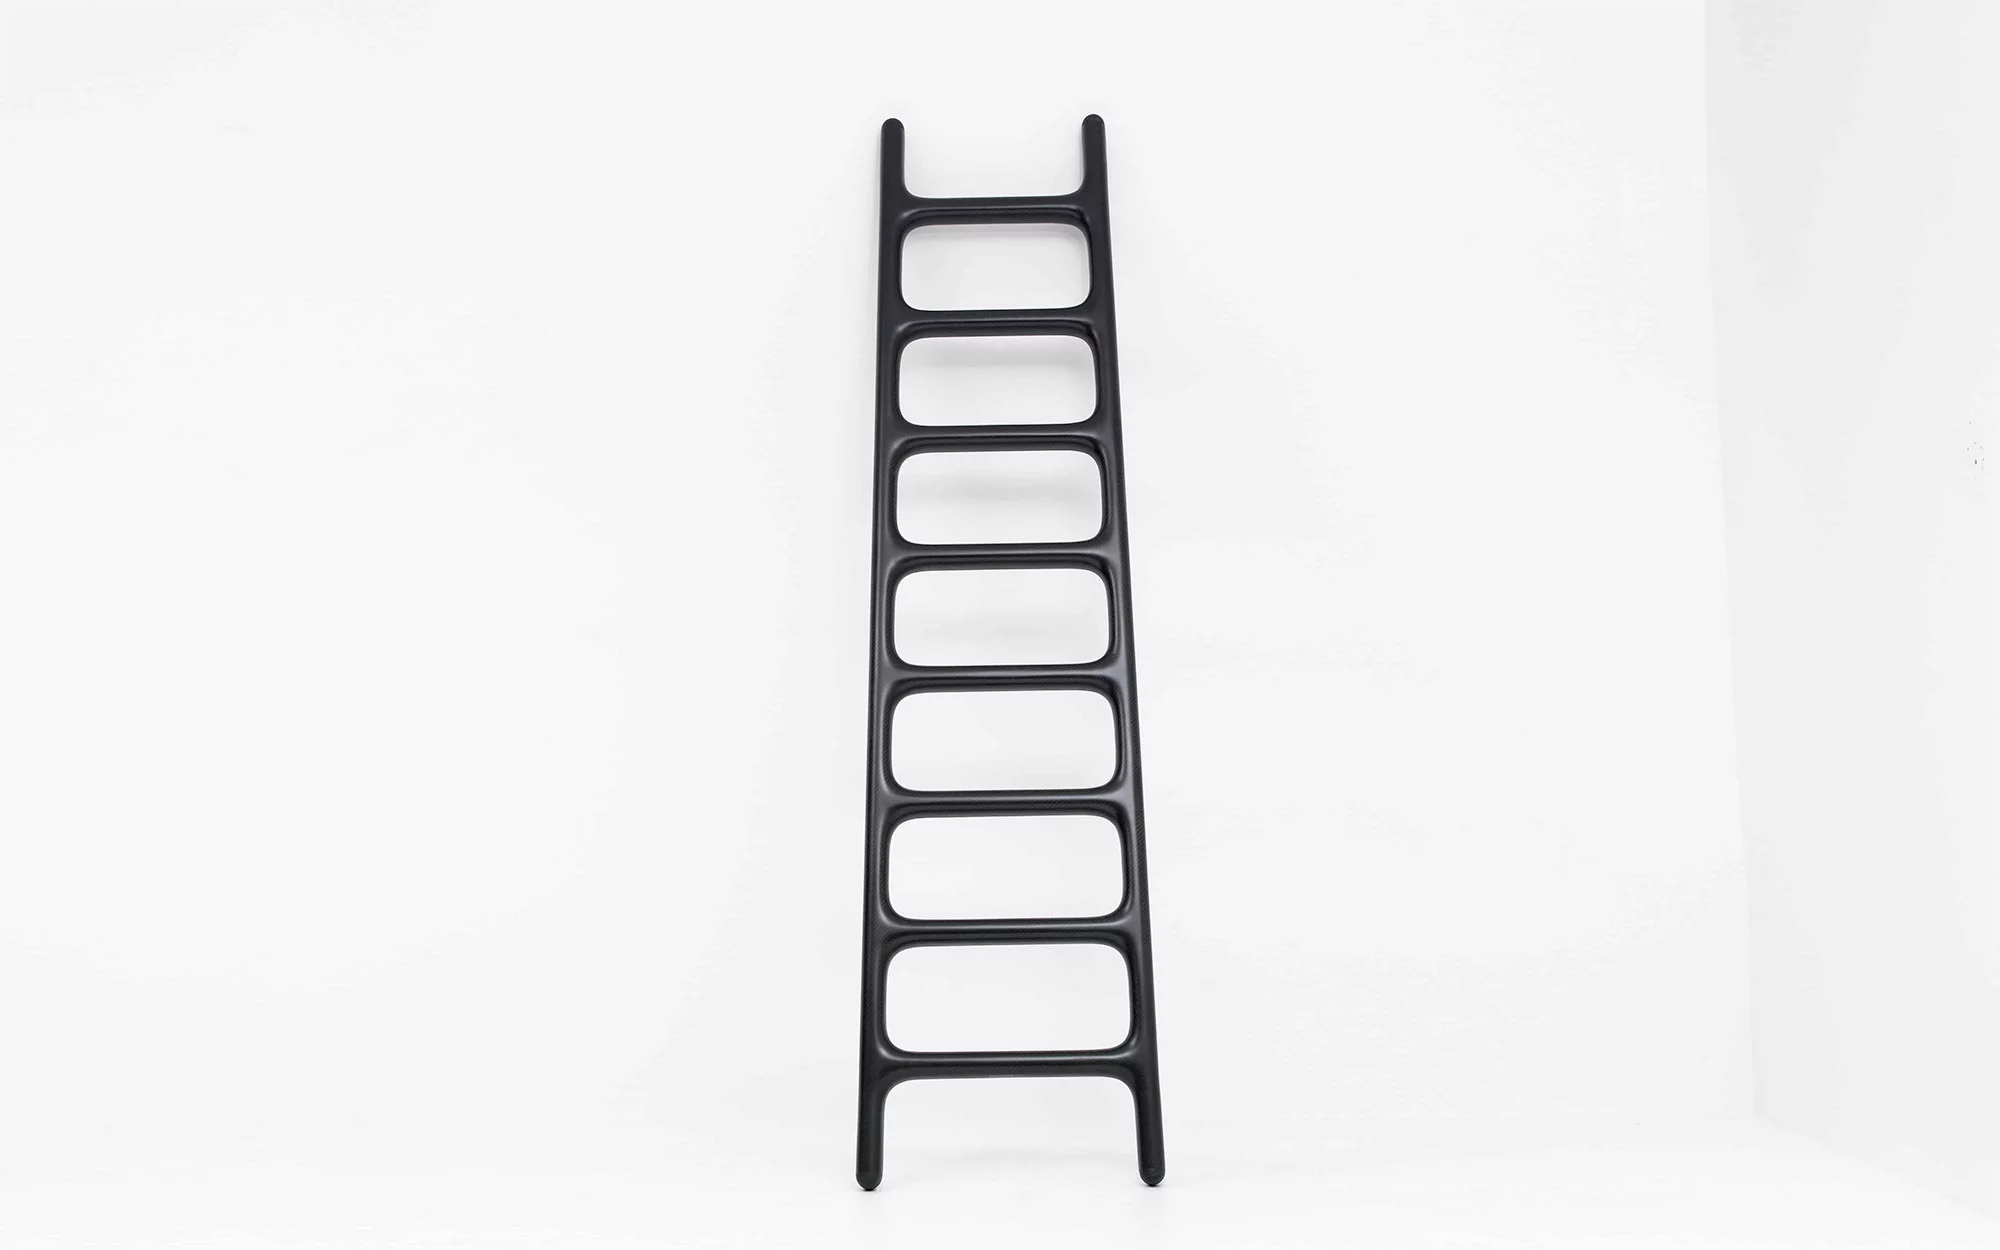 Carbon Ladder - Marc Newson - Bookshelf - Galerie kreo